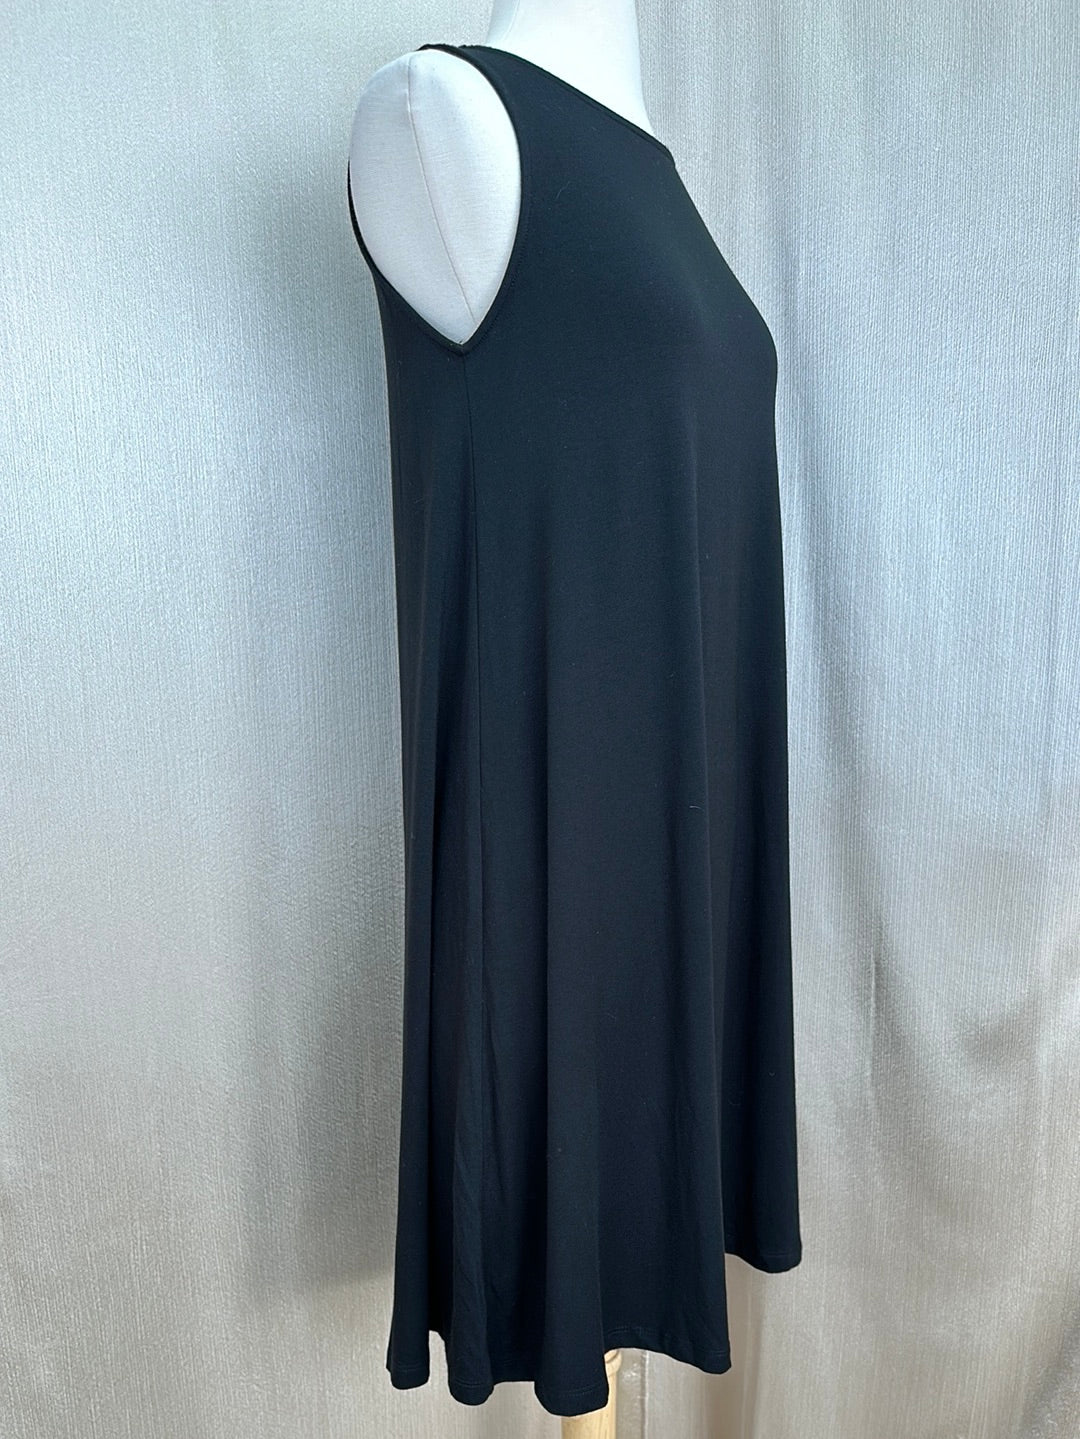 COMFY USA black Modal Sleeveless Swing Dress - XS